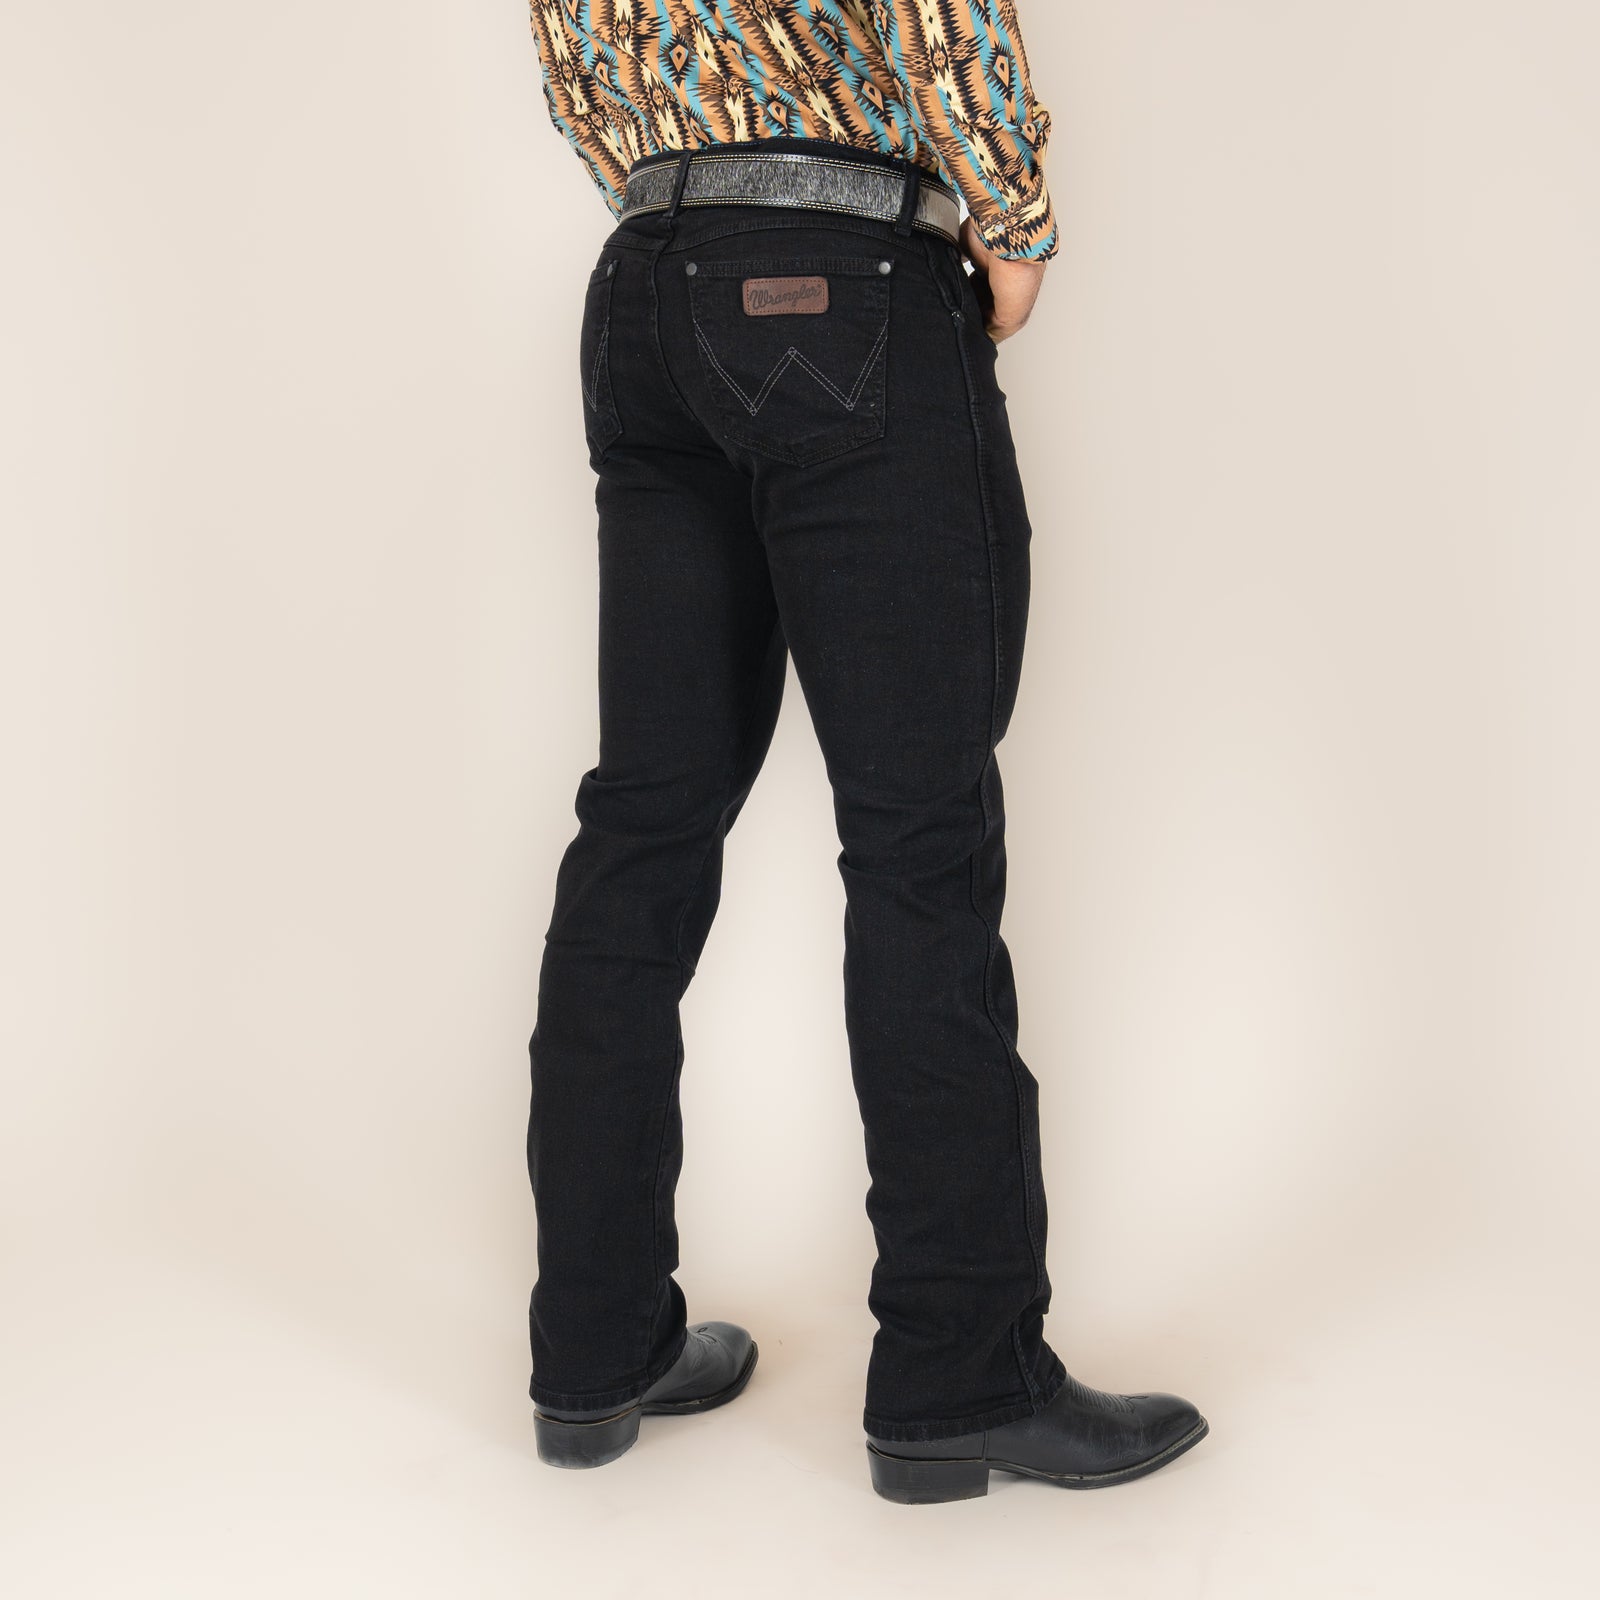 Jeans Wrangler Retro Slim Boot Black Caballero